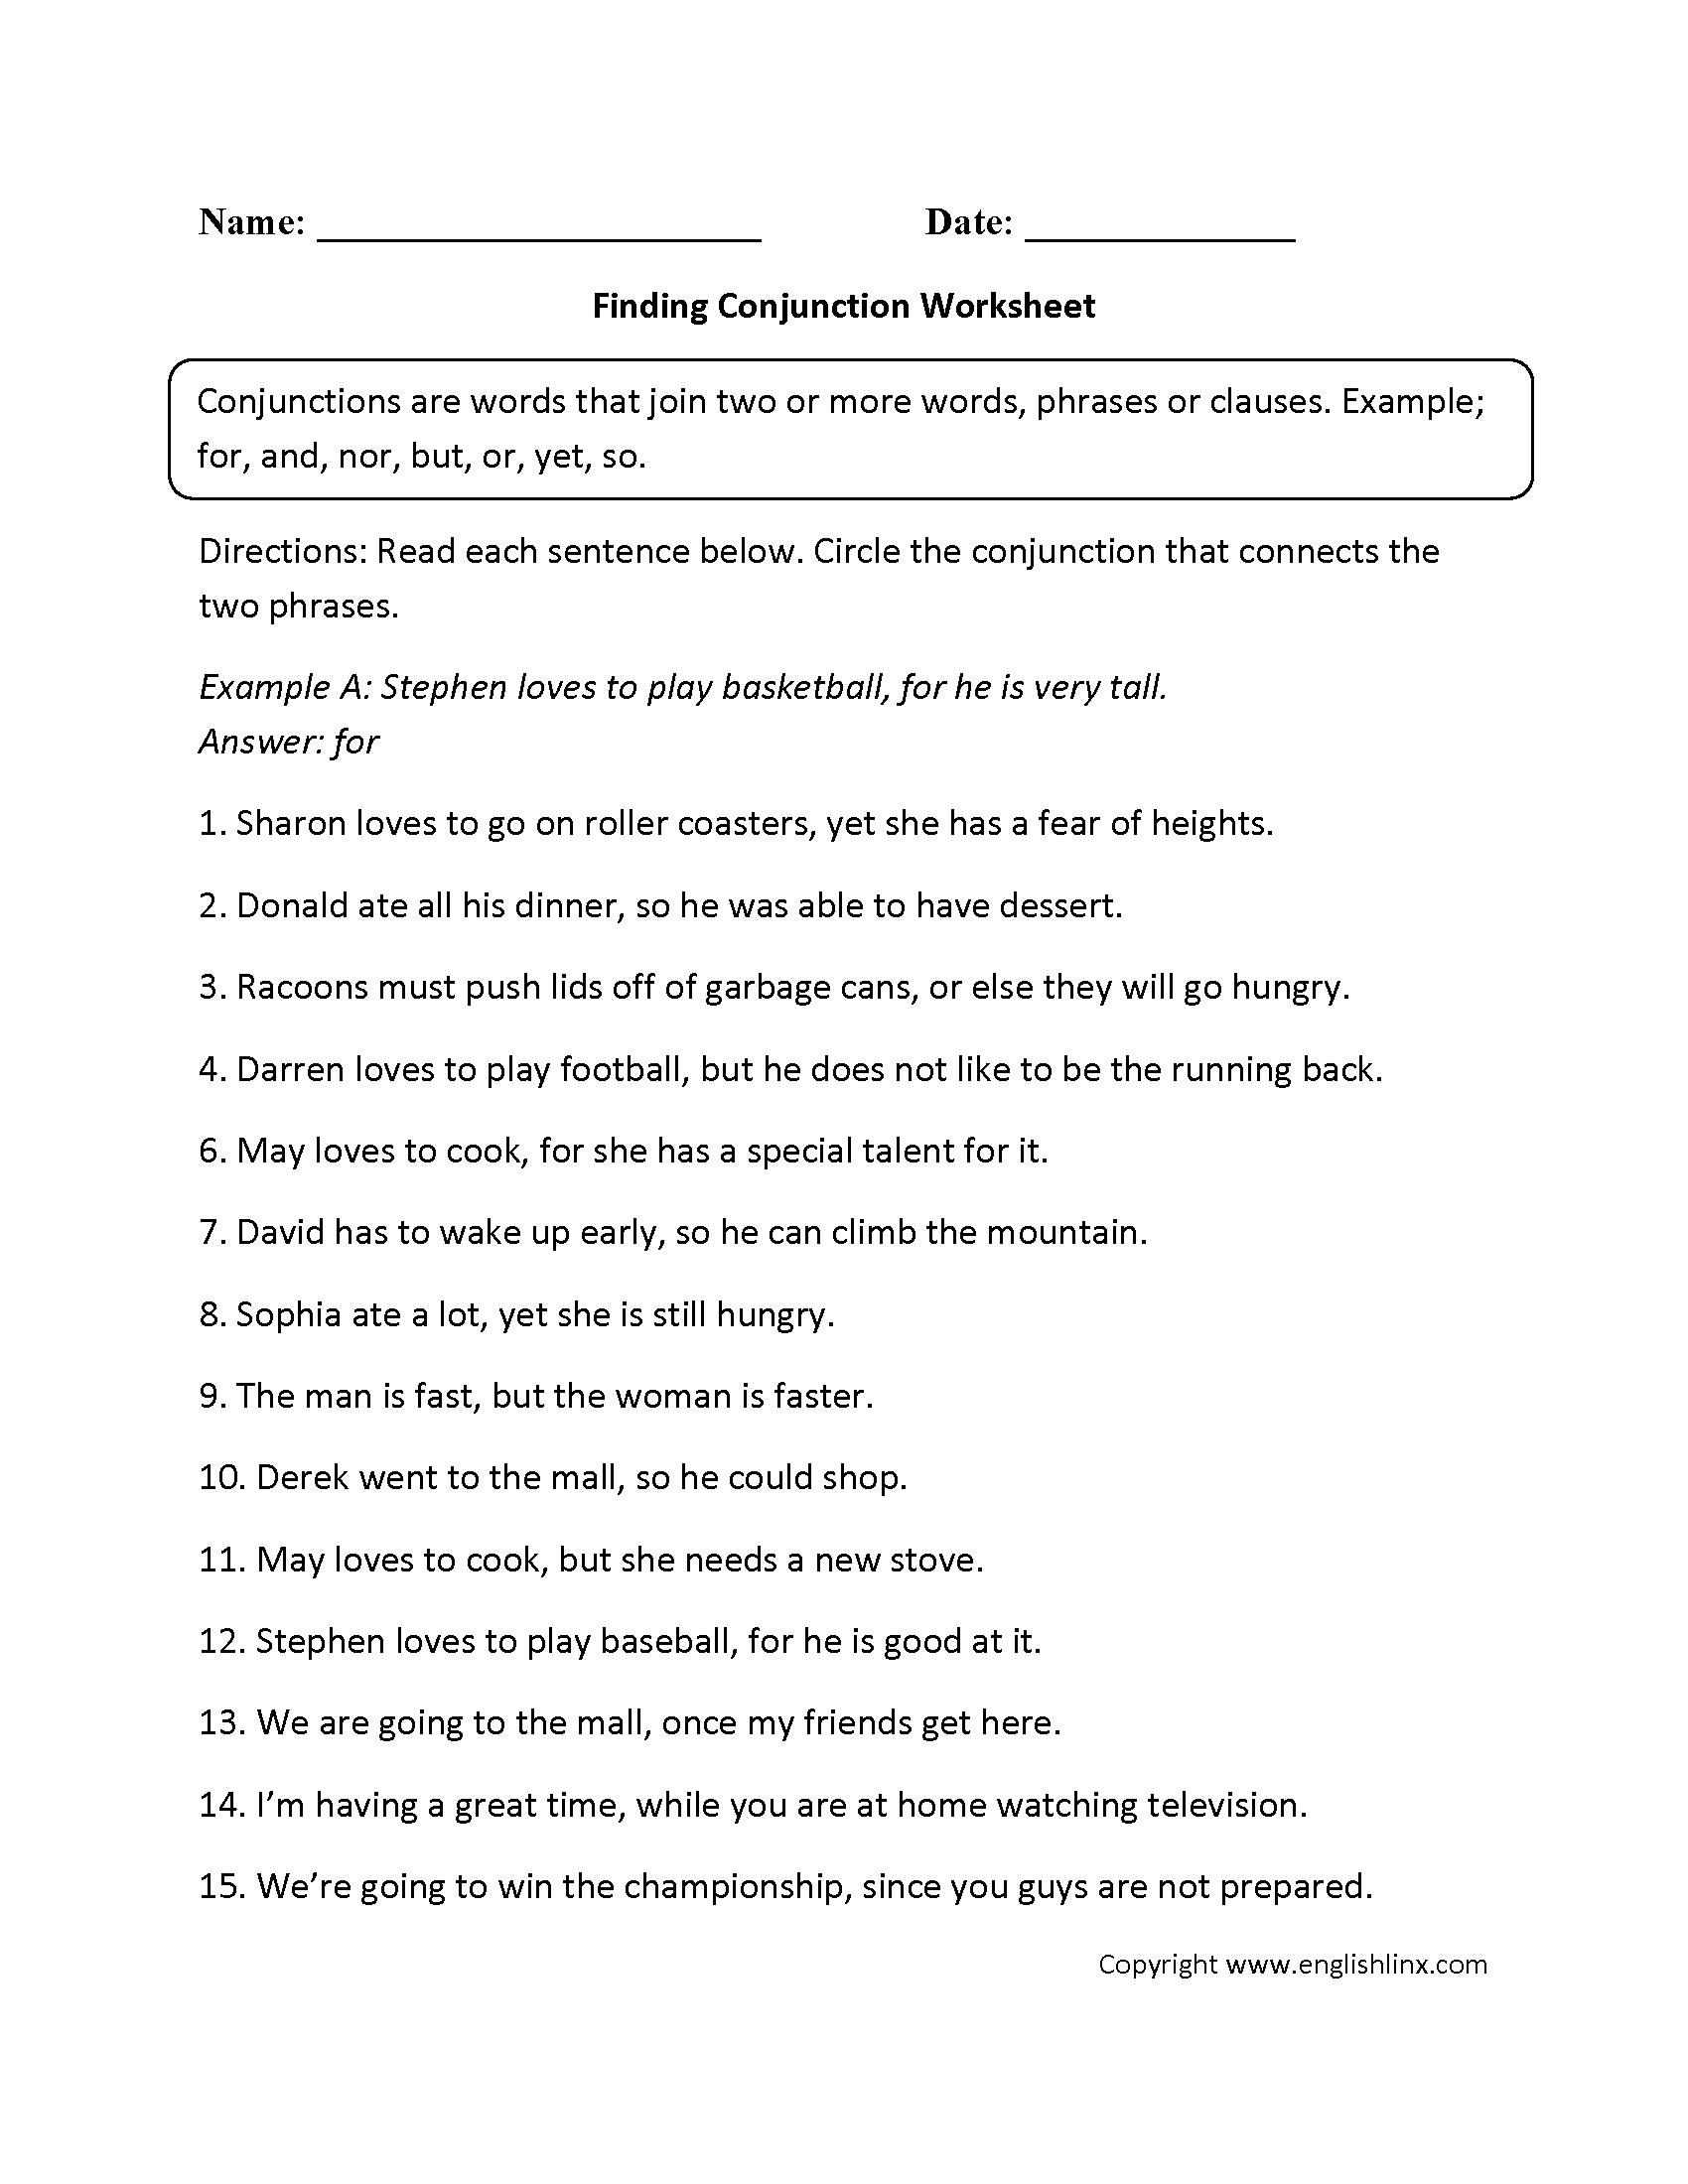 parts of speech worksheet for class 7 pdf